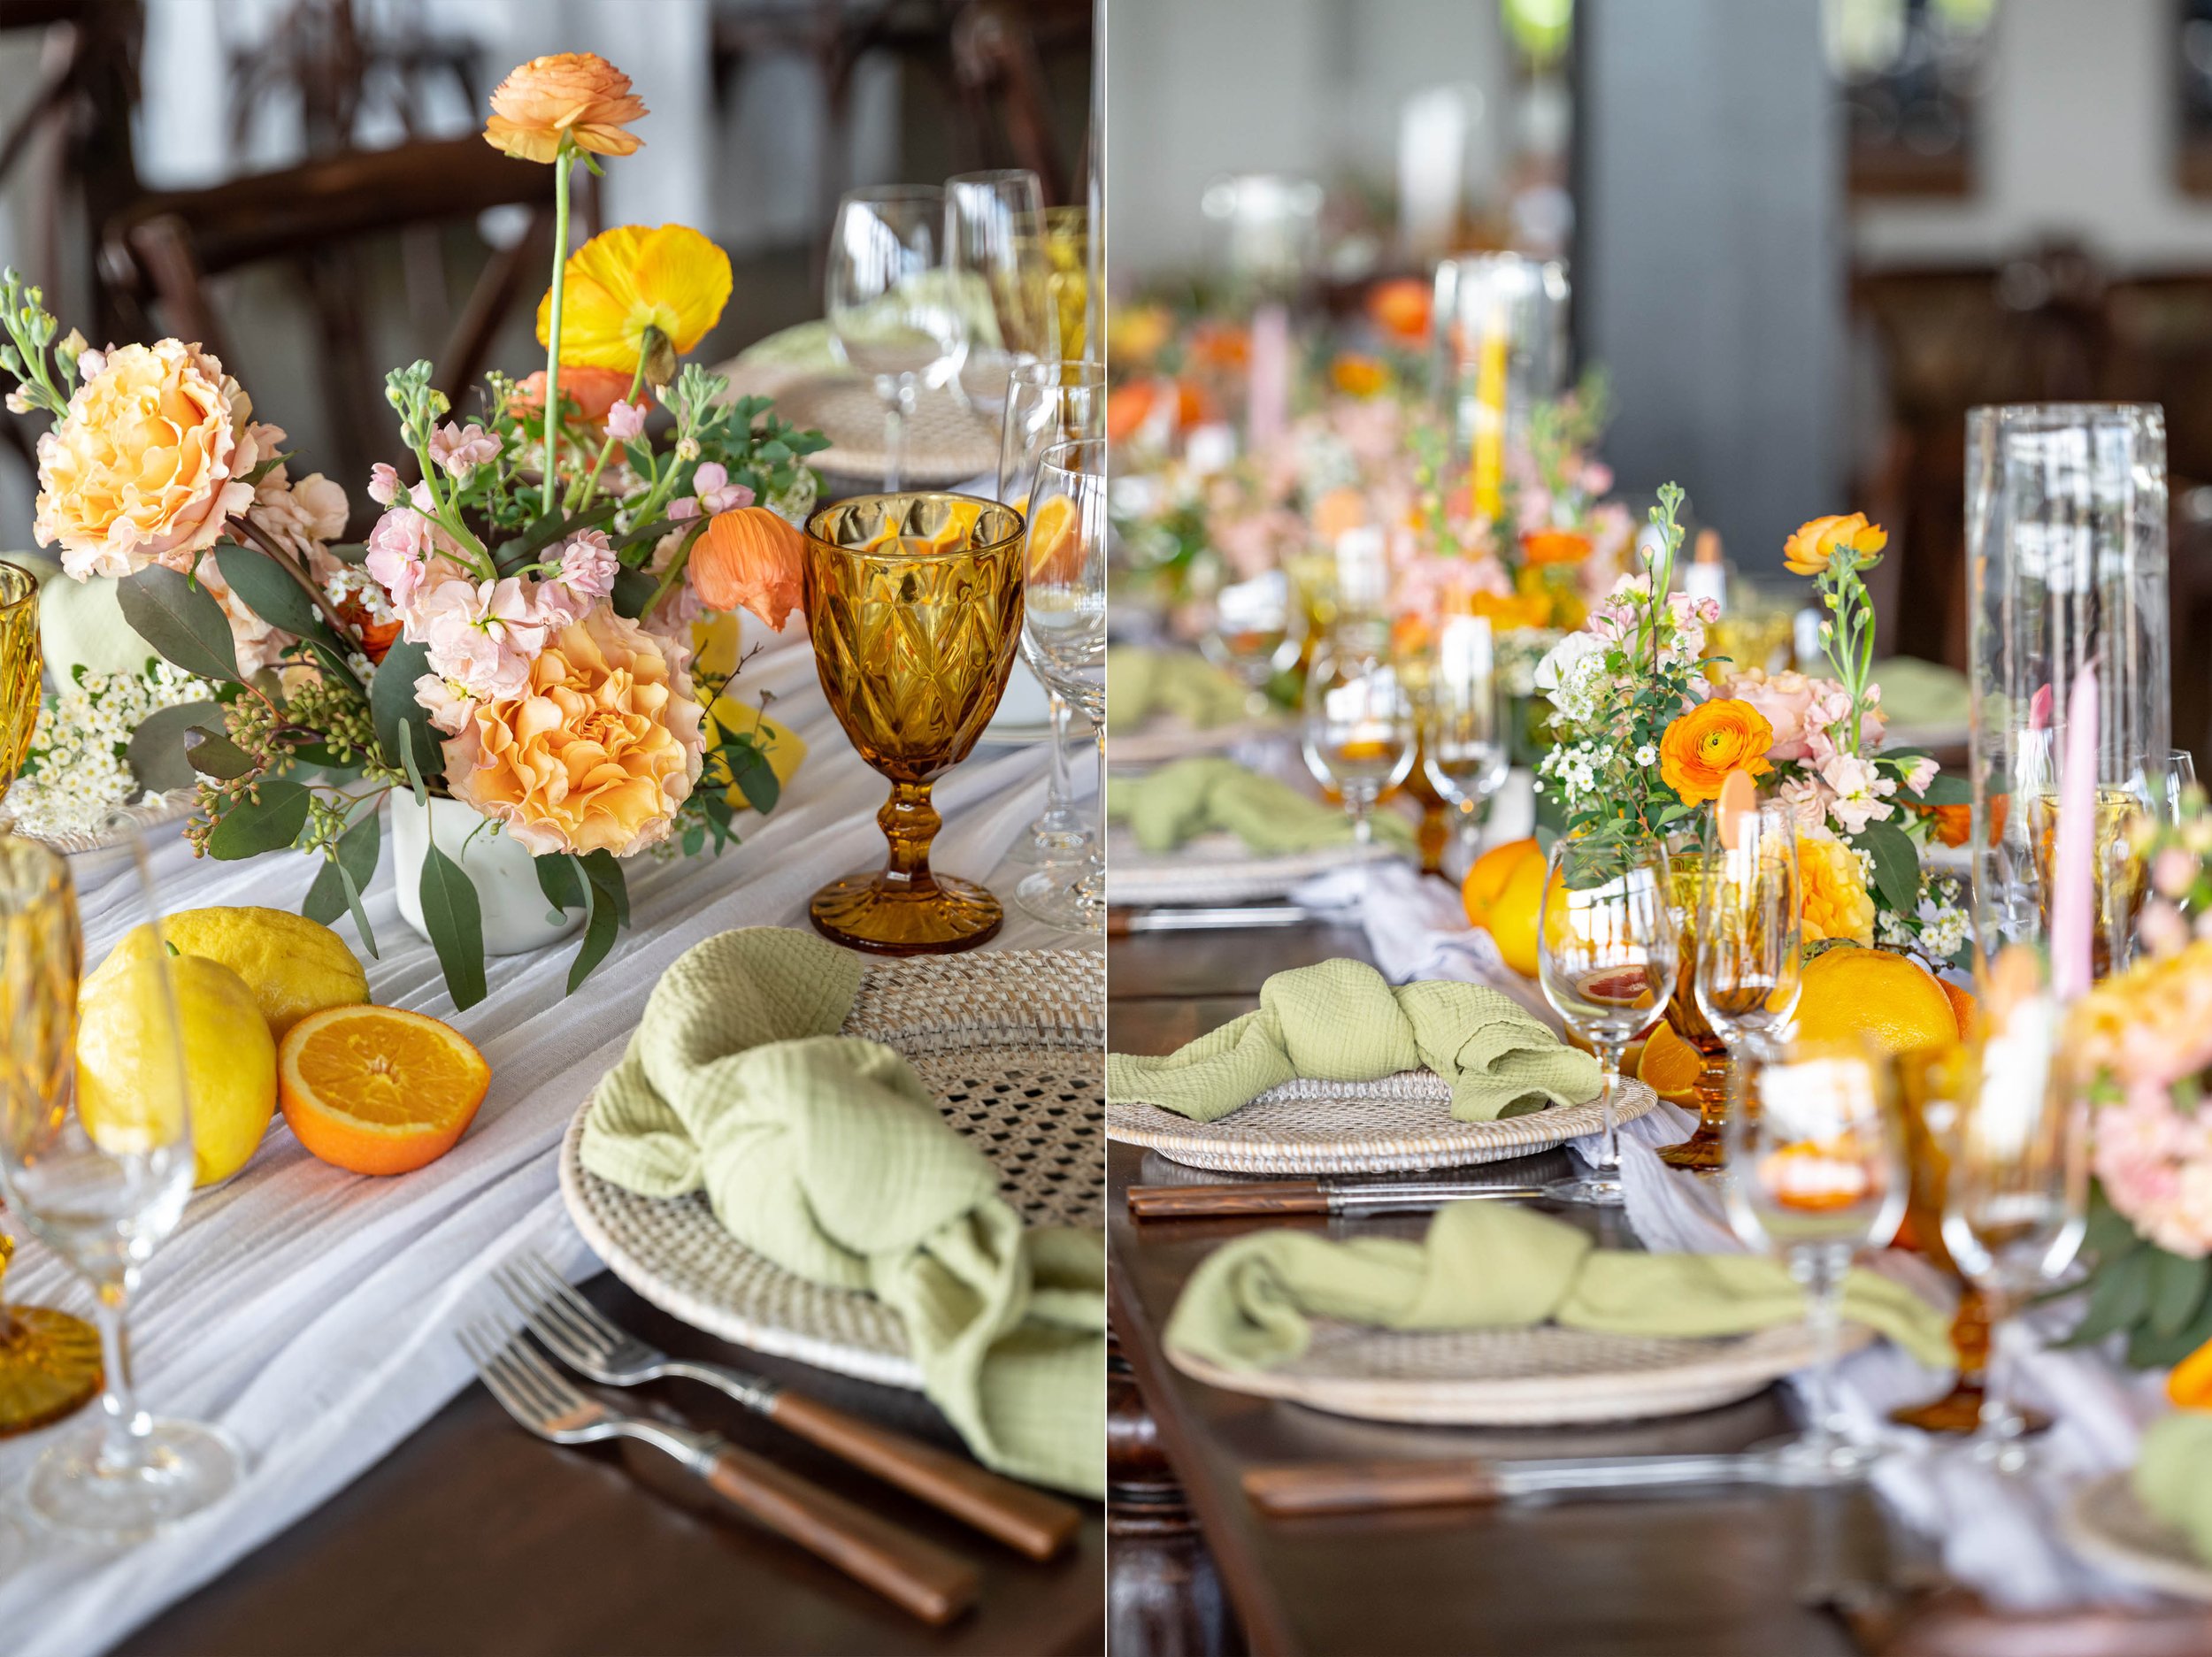 flowers and citrus wedding table centerpiece ideas